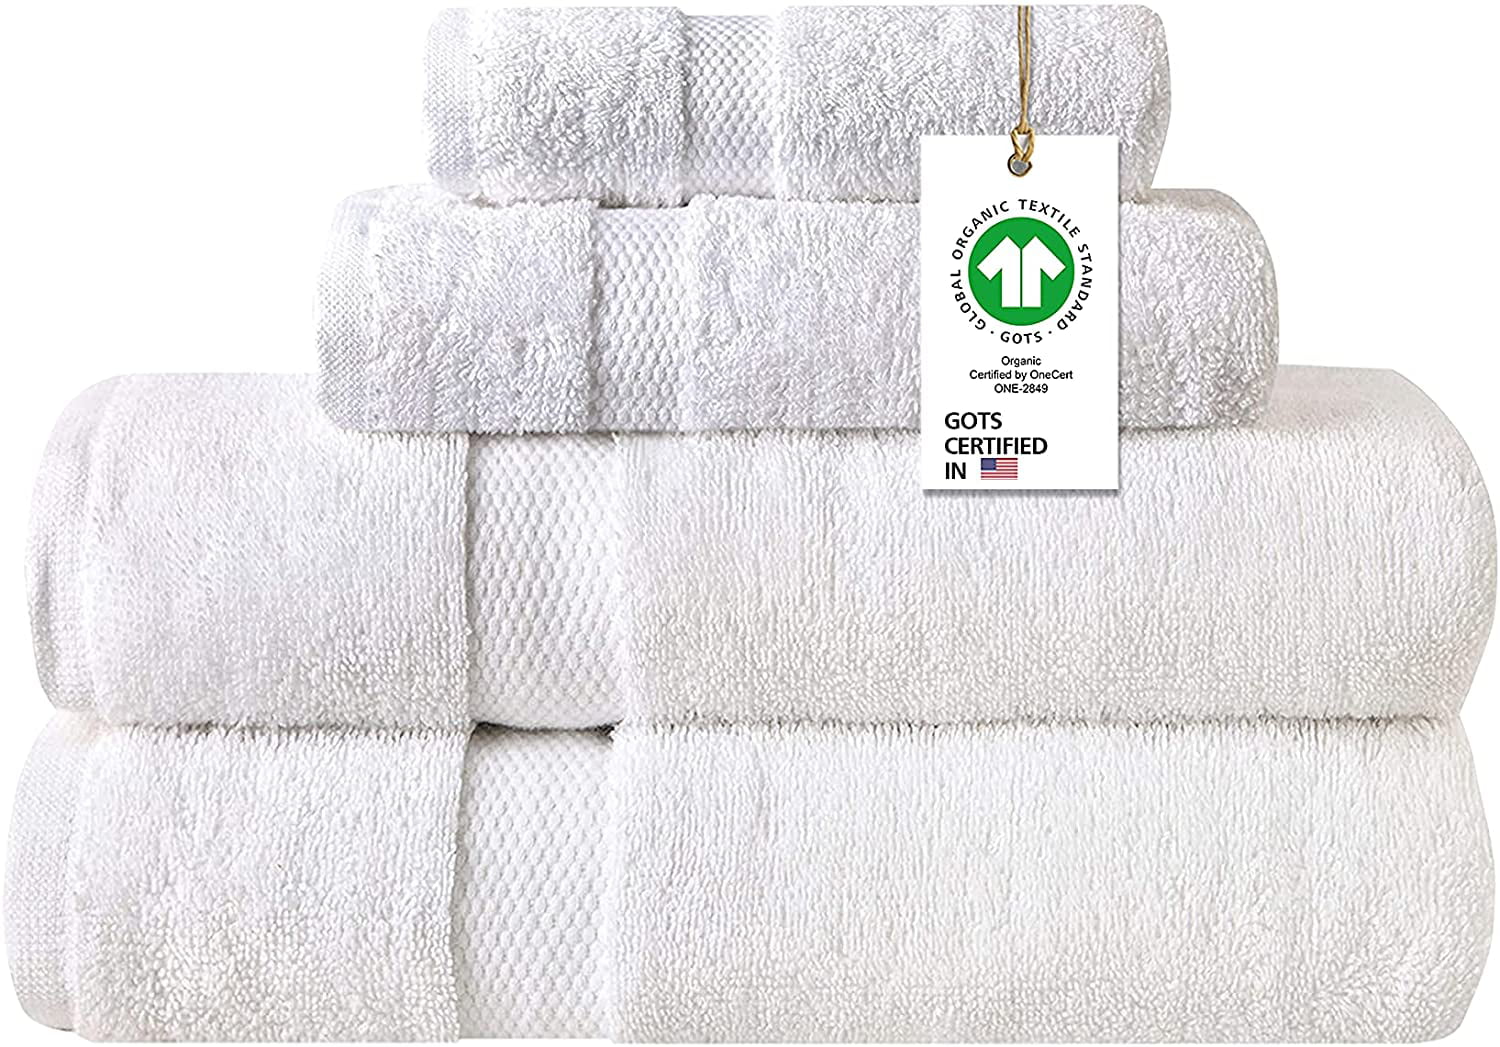 Details about   Hot Deal Organic Cotton Bathroom Washcloths Set of 12 Sand 